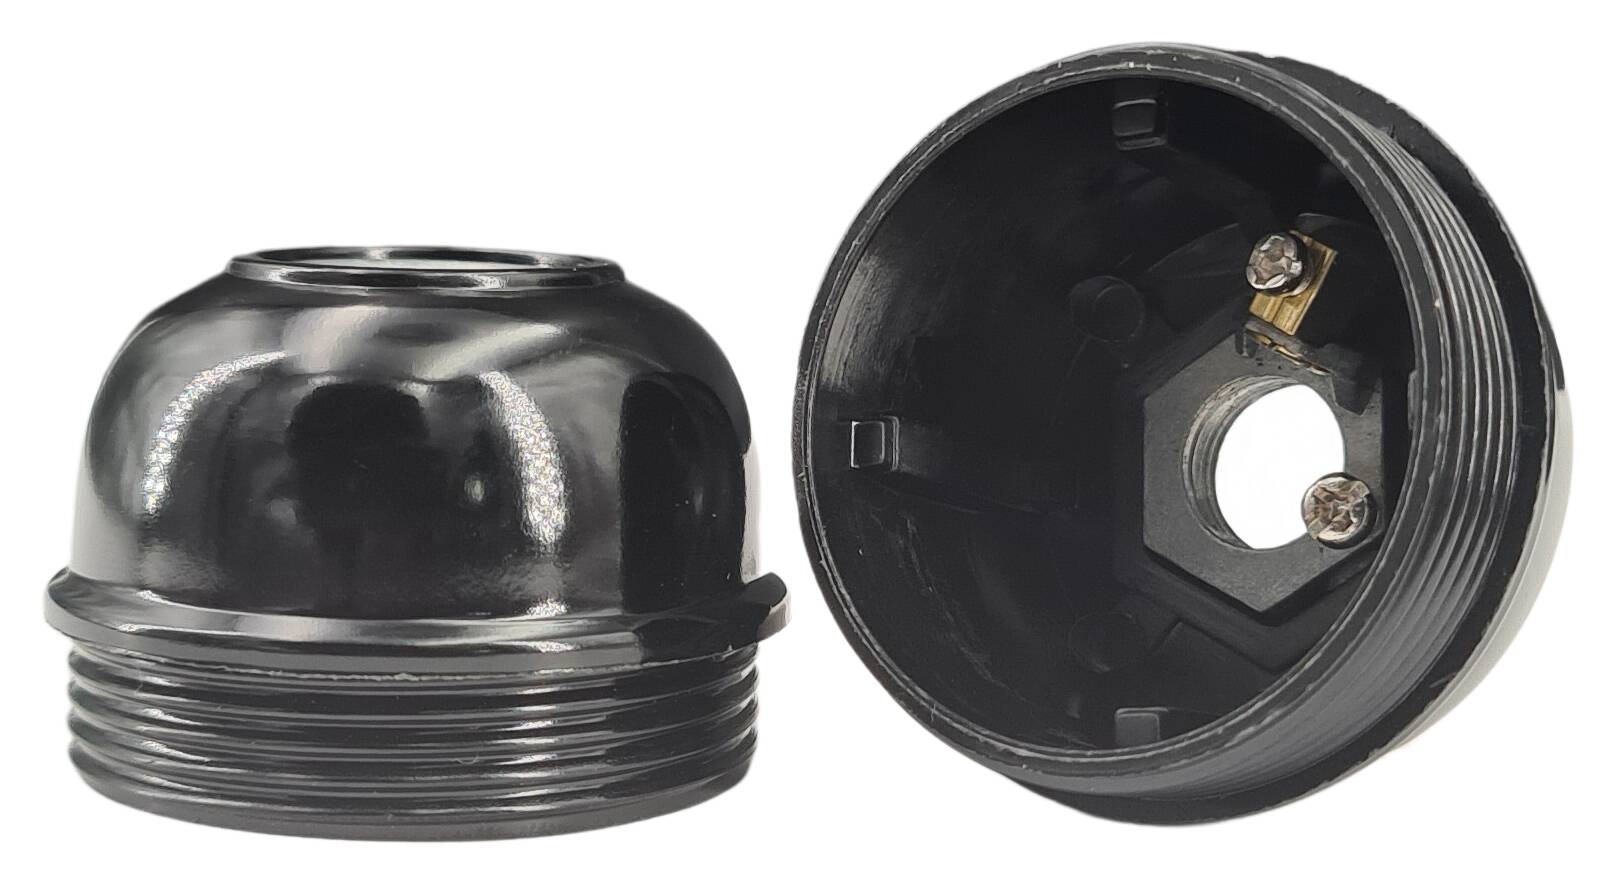 E27 cap for 3-part lampholder M10x1 iron thread bakelite look black